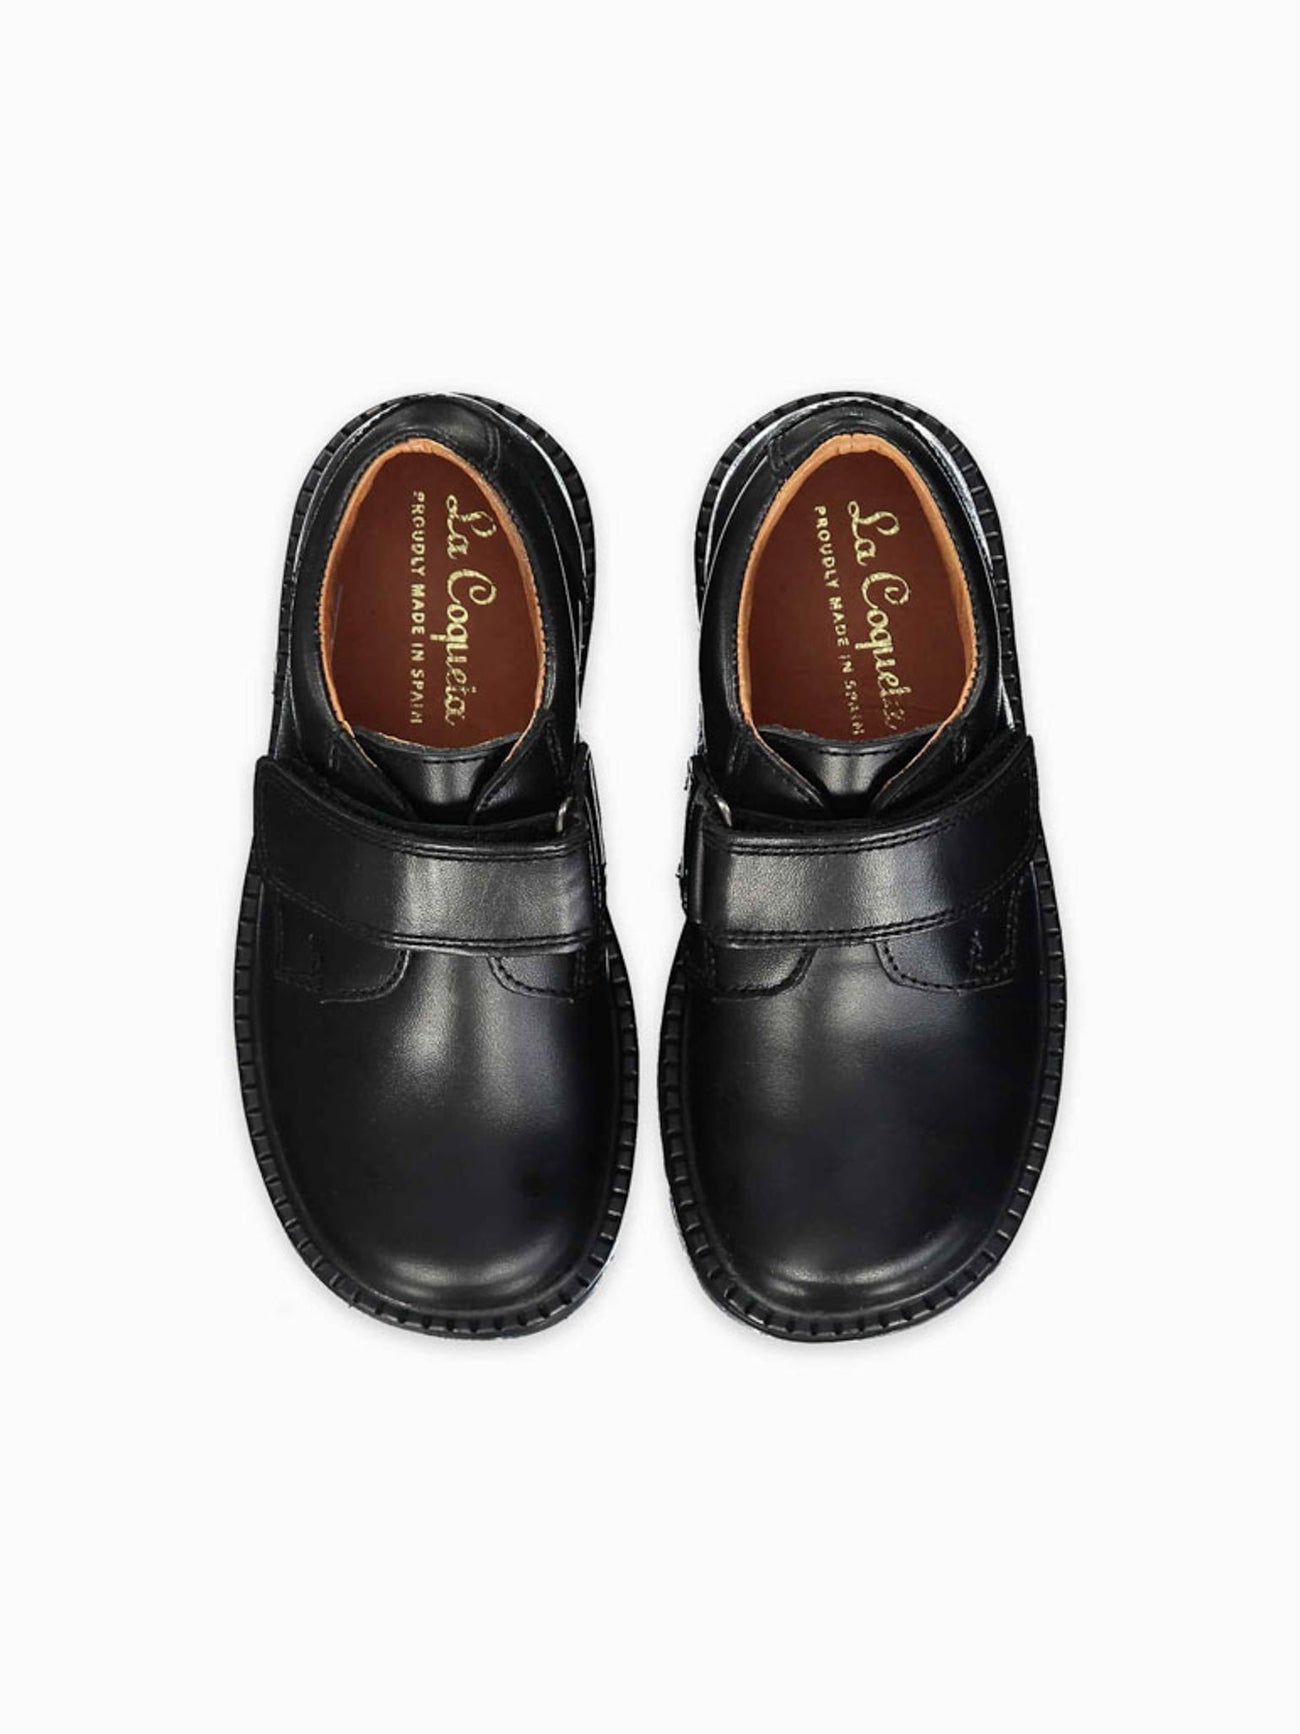 Black Leather Boy Classic School Shoes